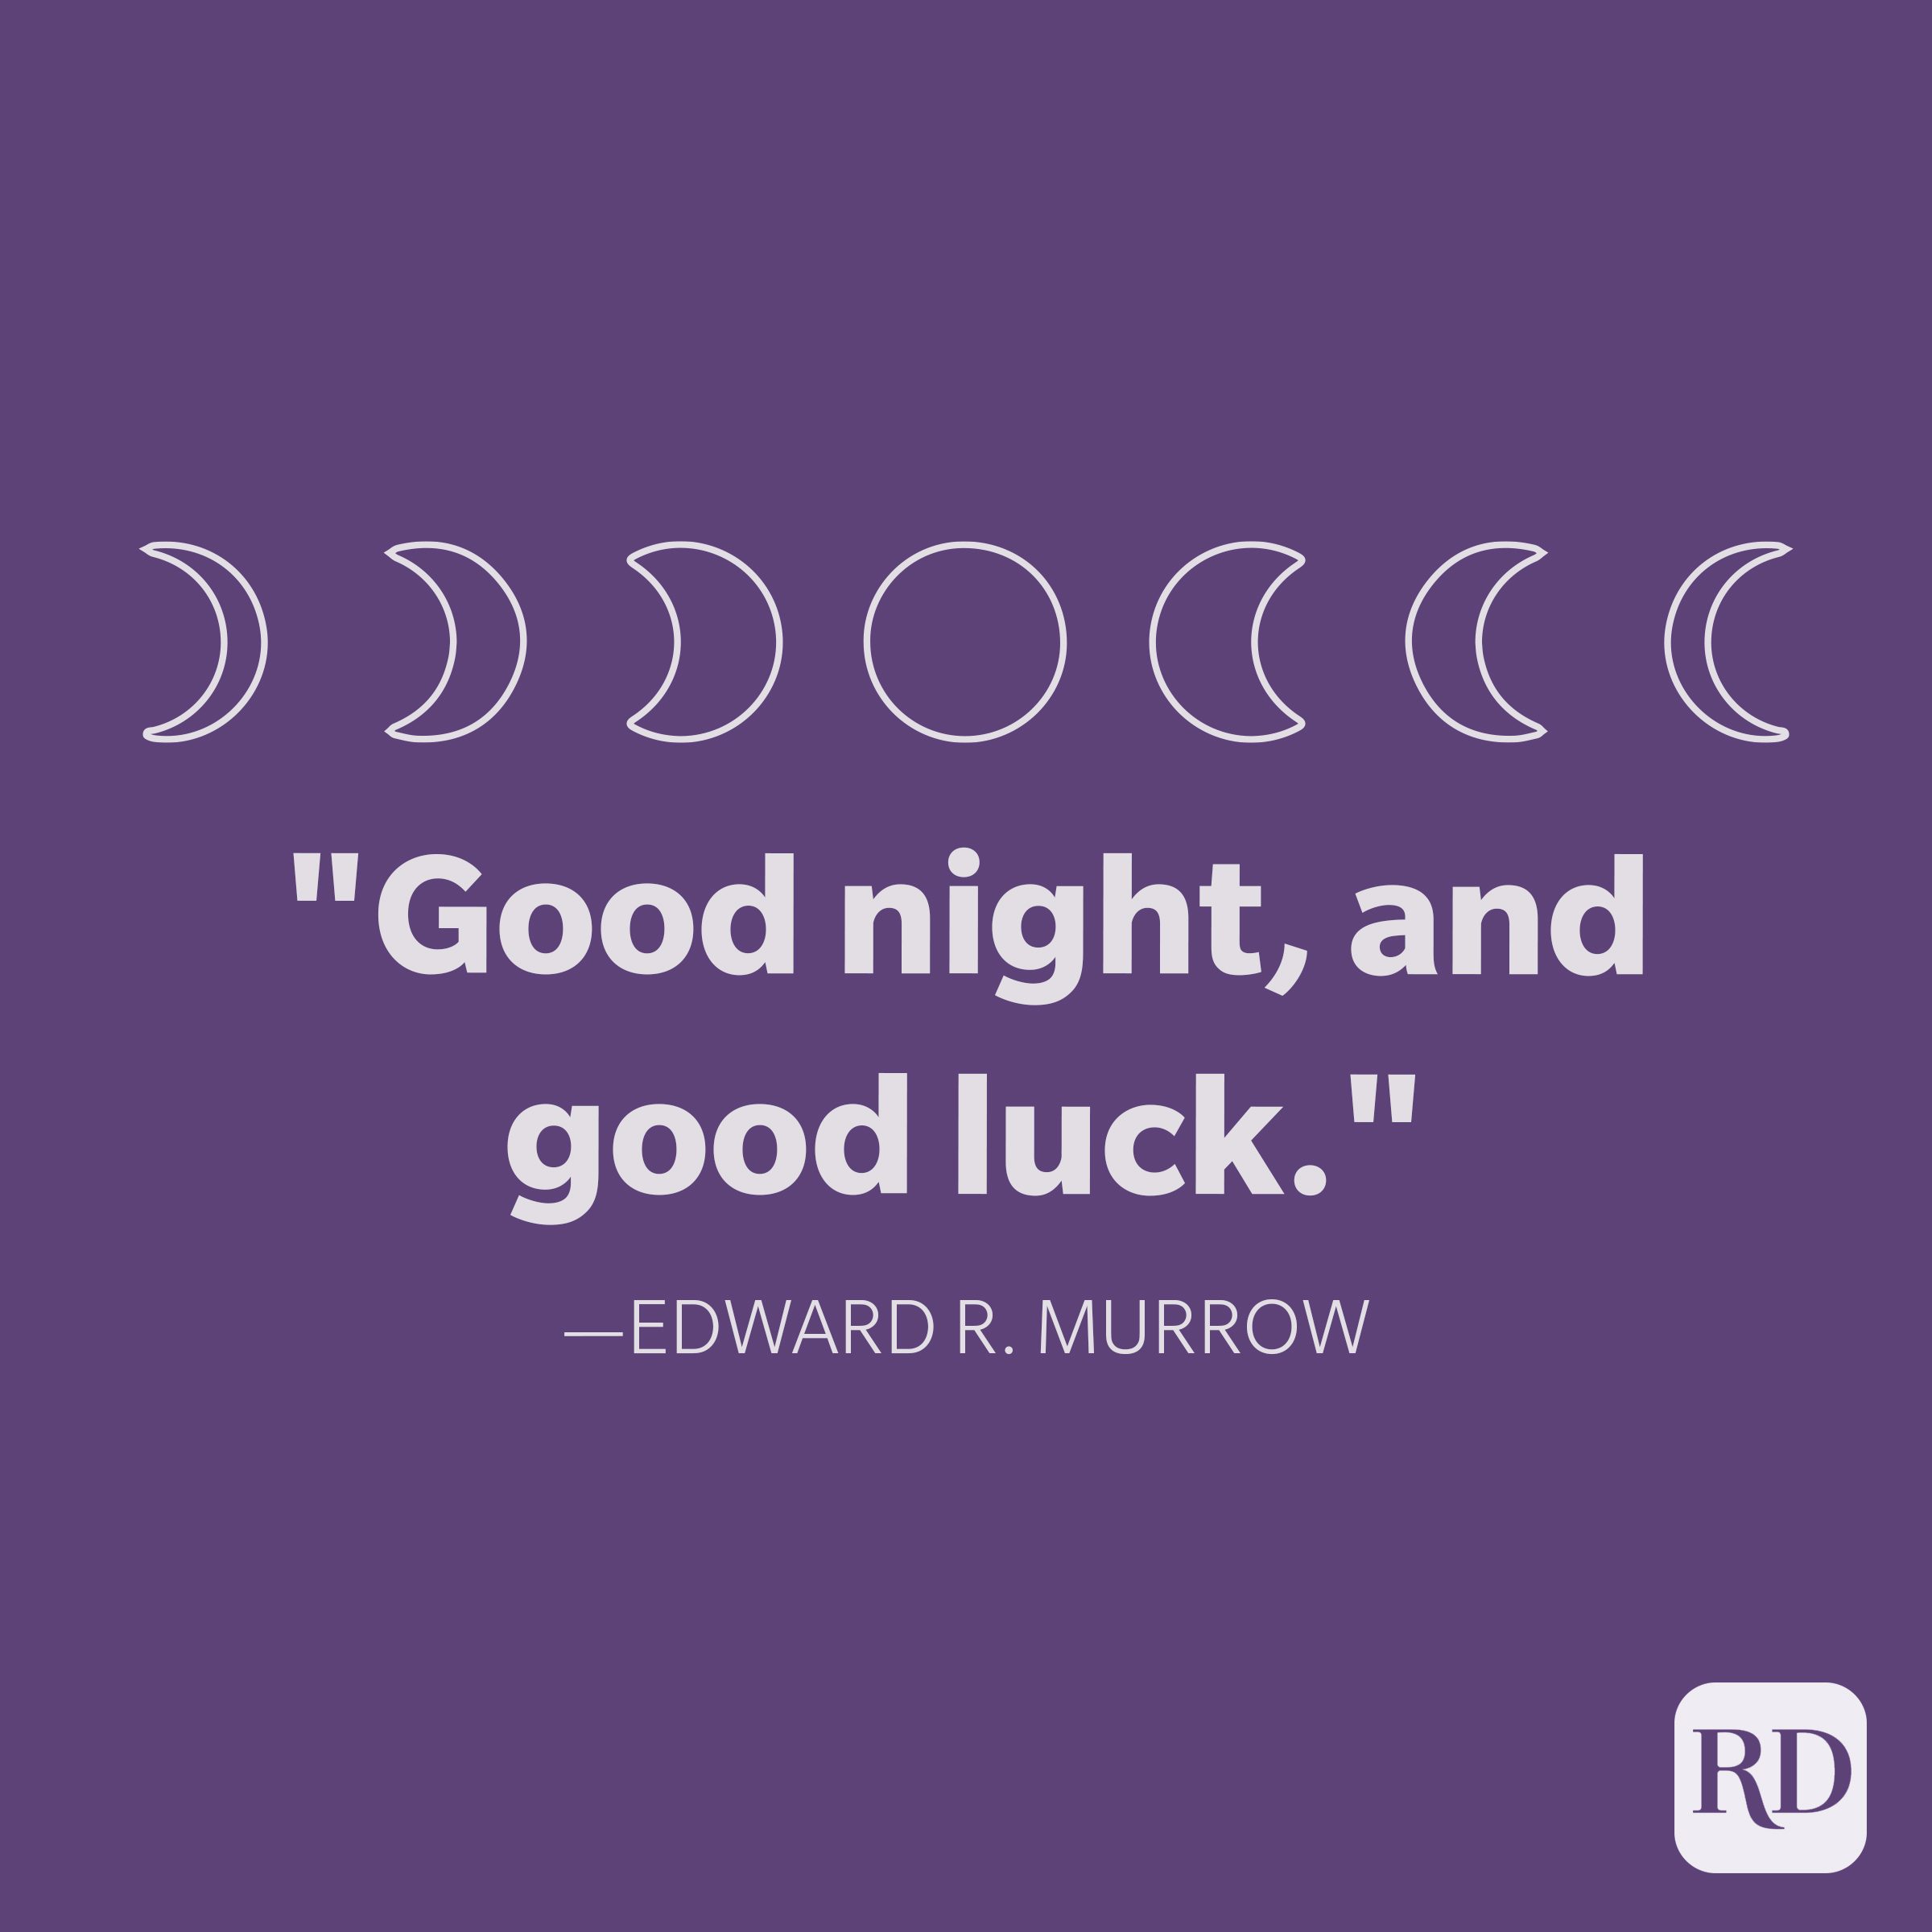 Edward R. Murrow Goodnight Quote